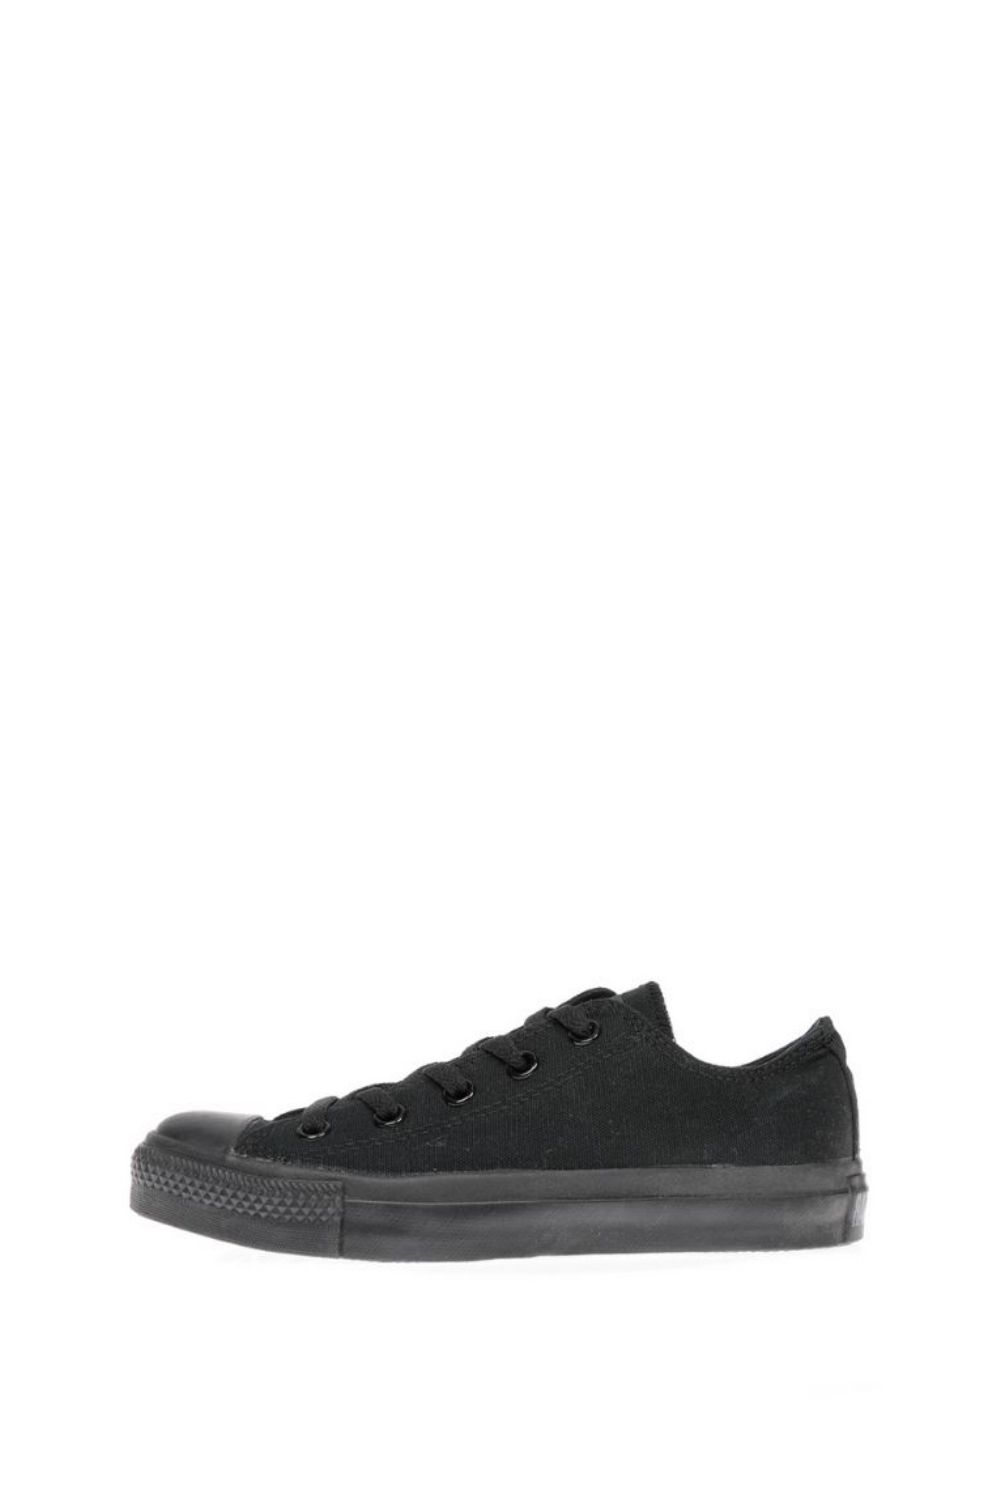 CONVERSE - Unisex παπούτσια Chuck Taylor AS Core μαύρα Ανδρικά/Παπούτσια/Sneakers